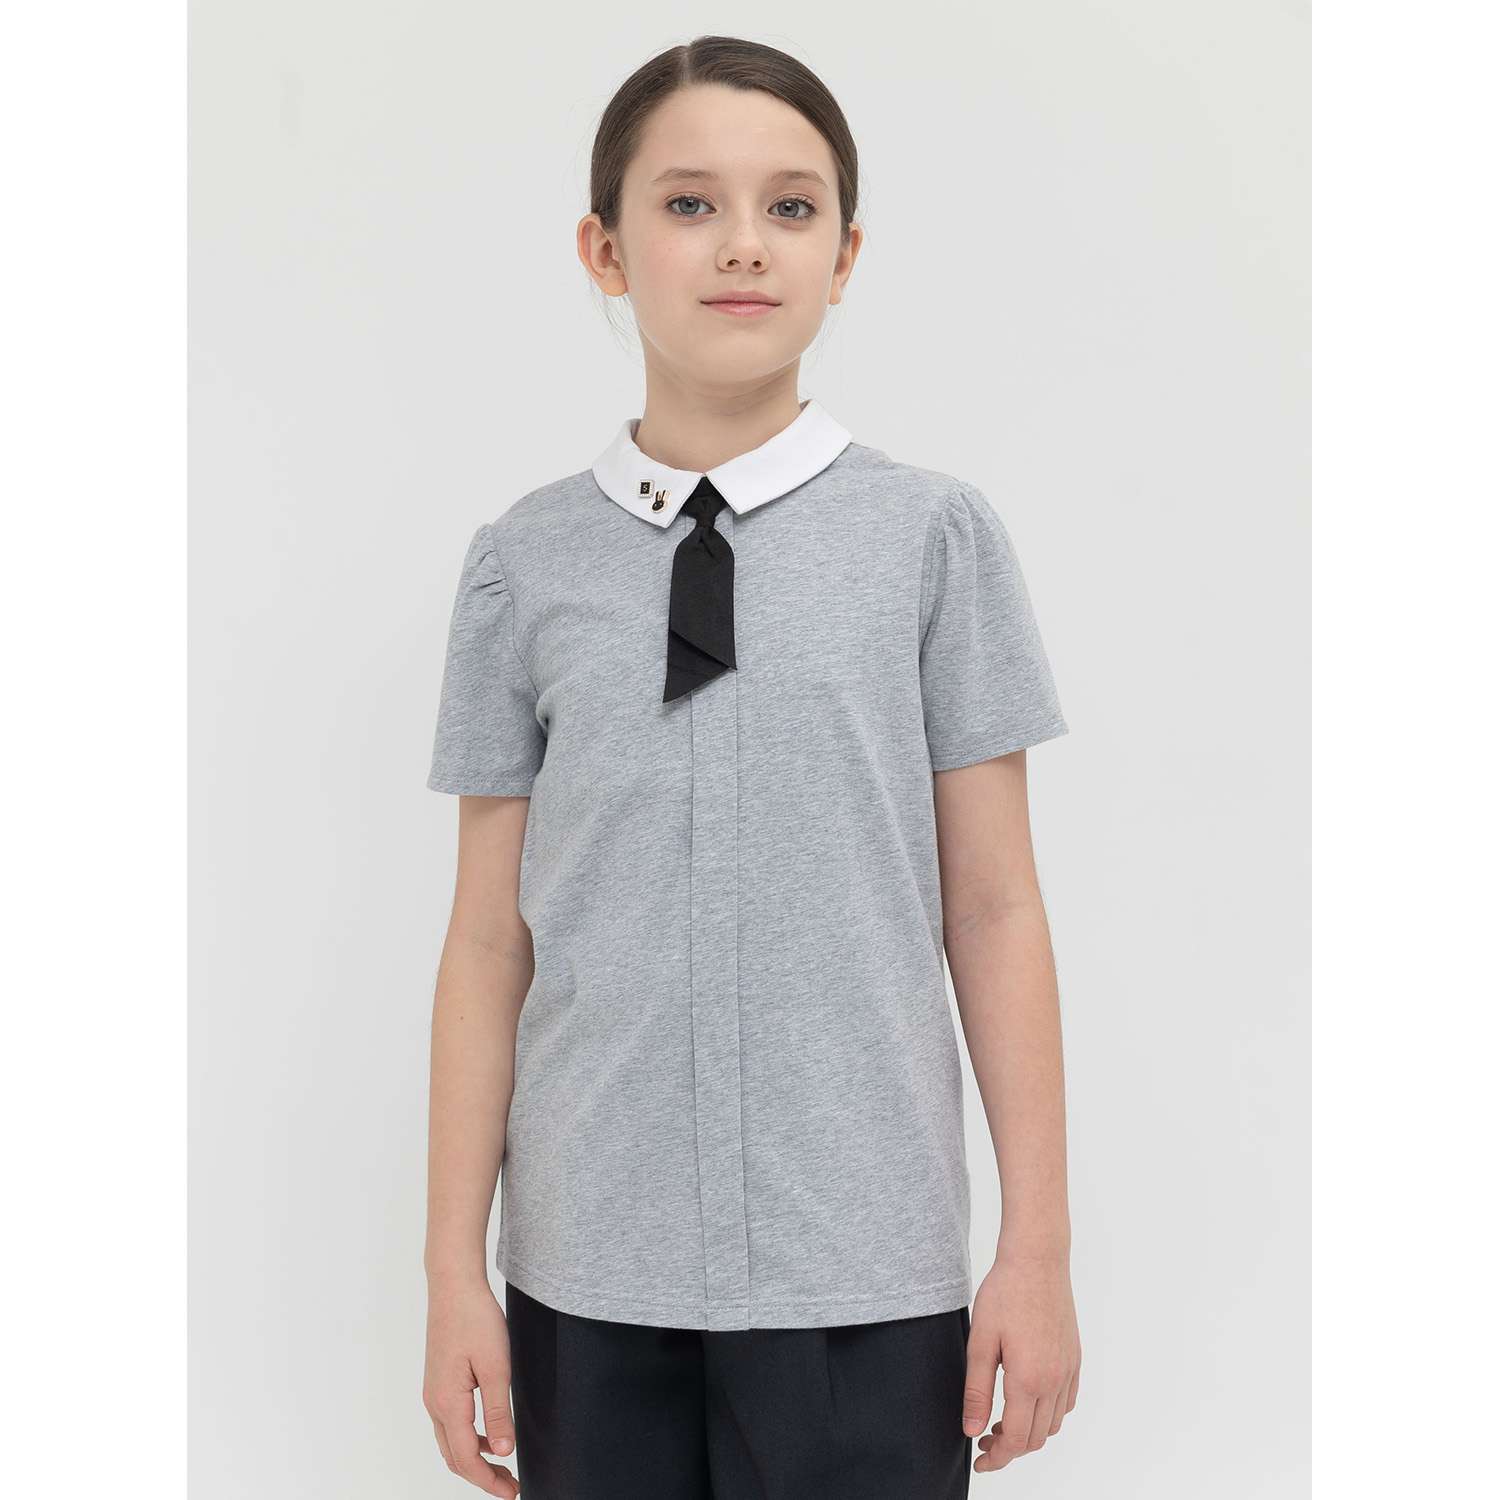 Блузка PELICAN GFT8141/Серый(40) - фото 1